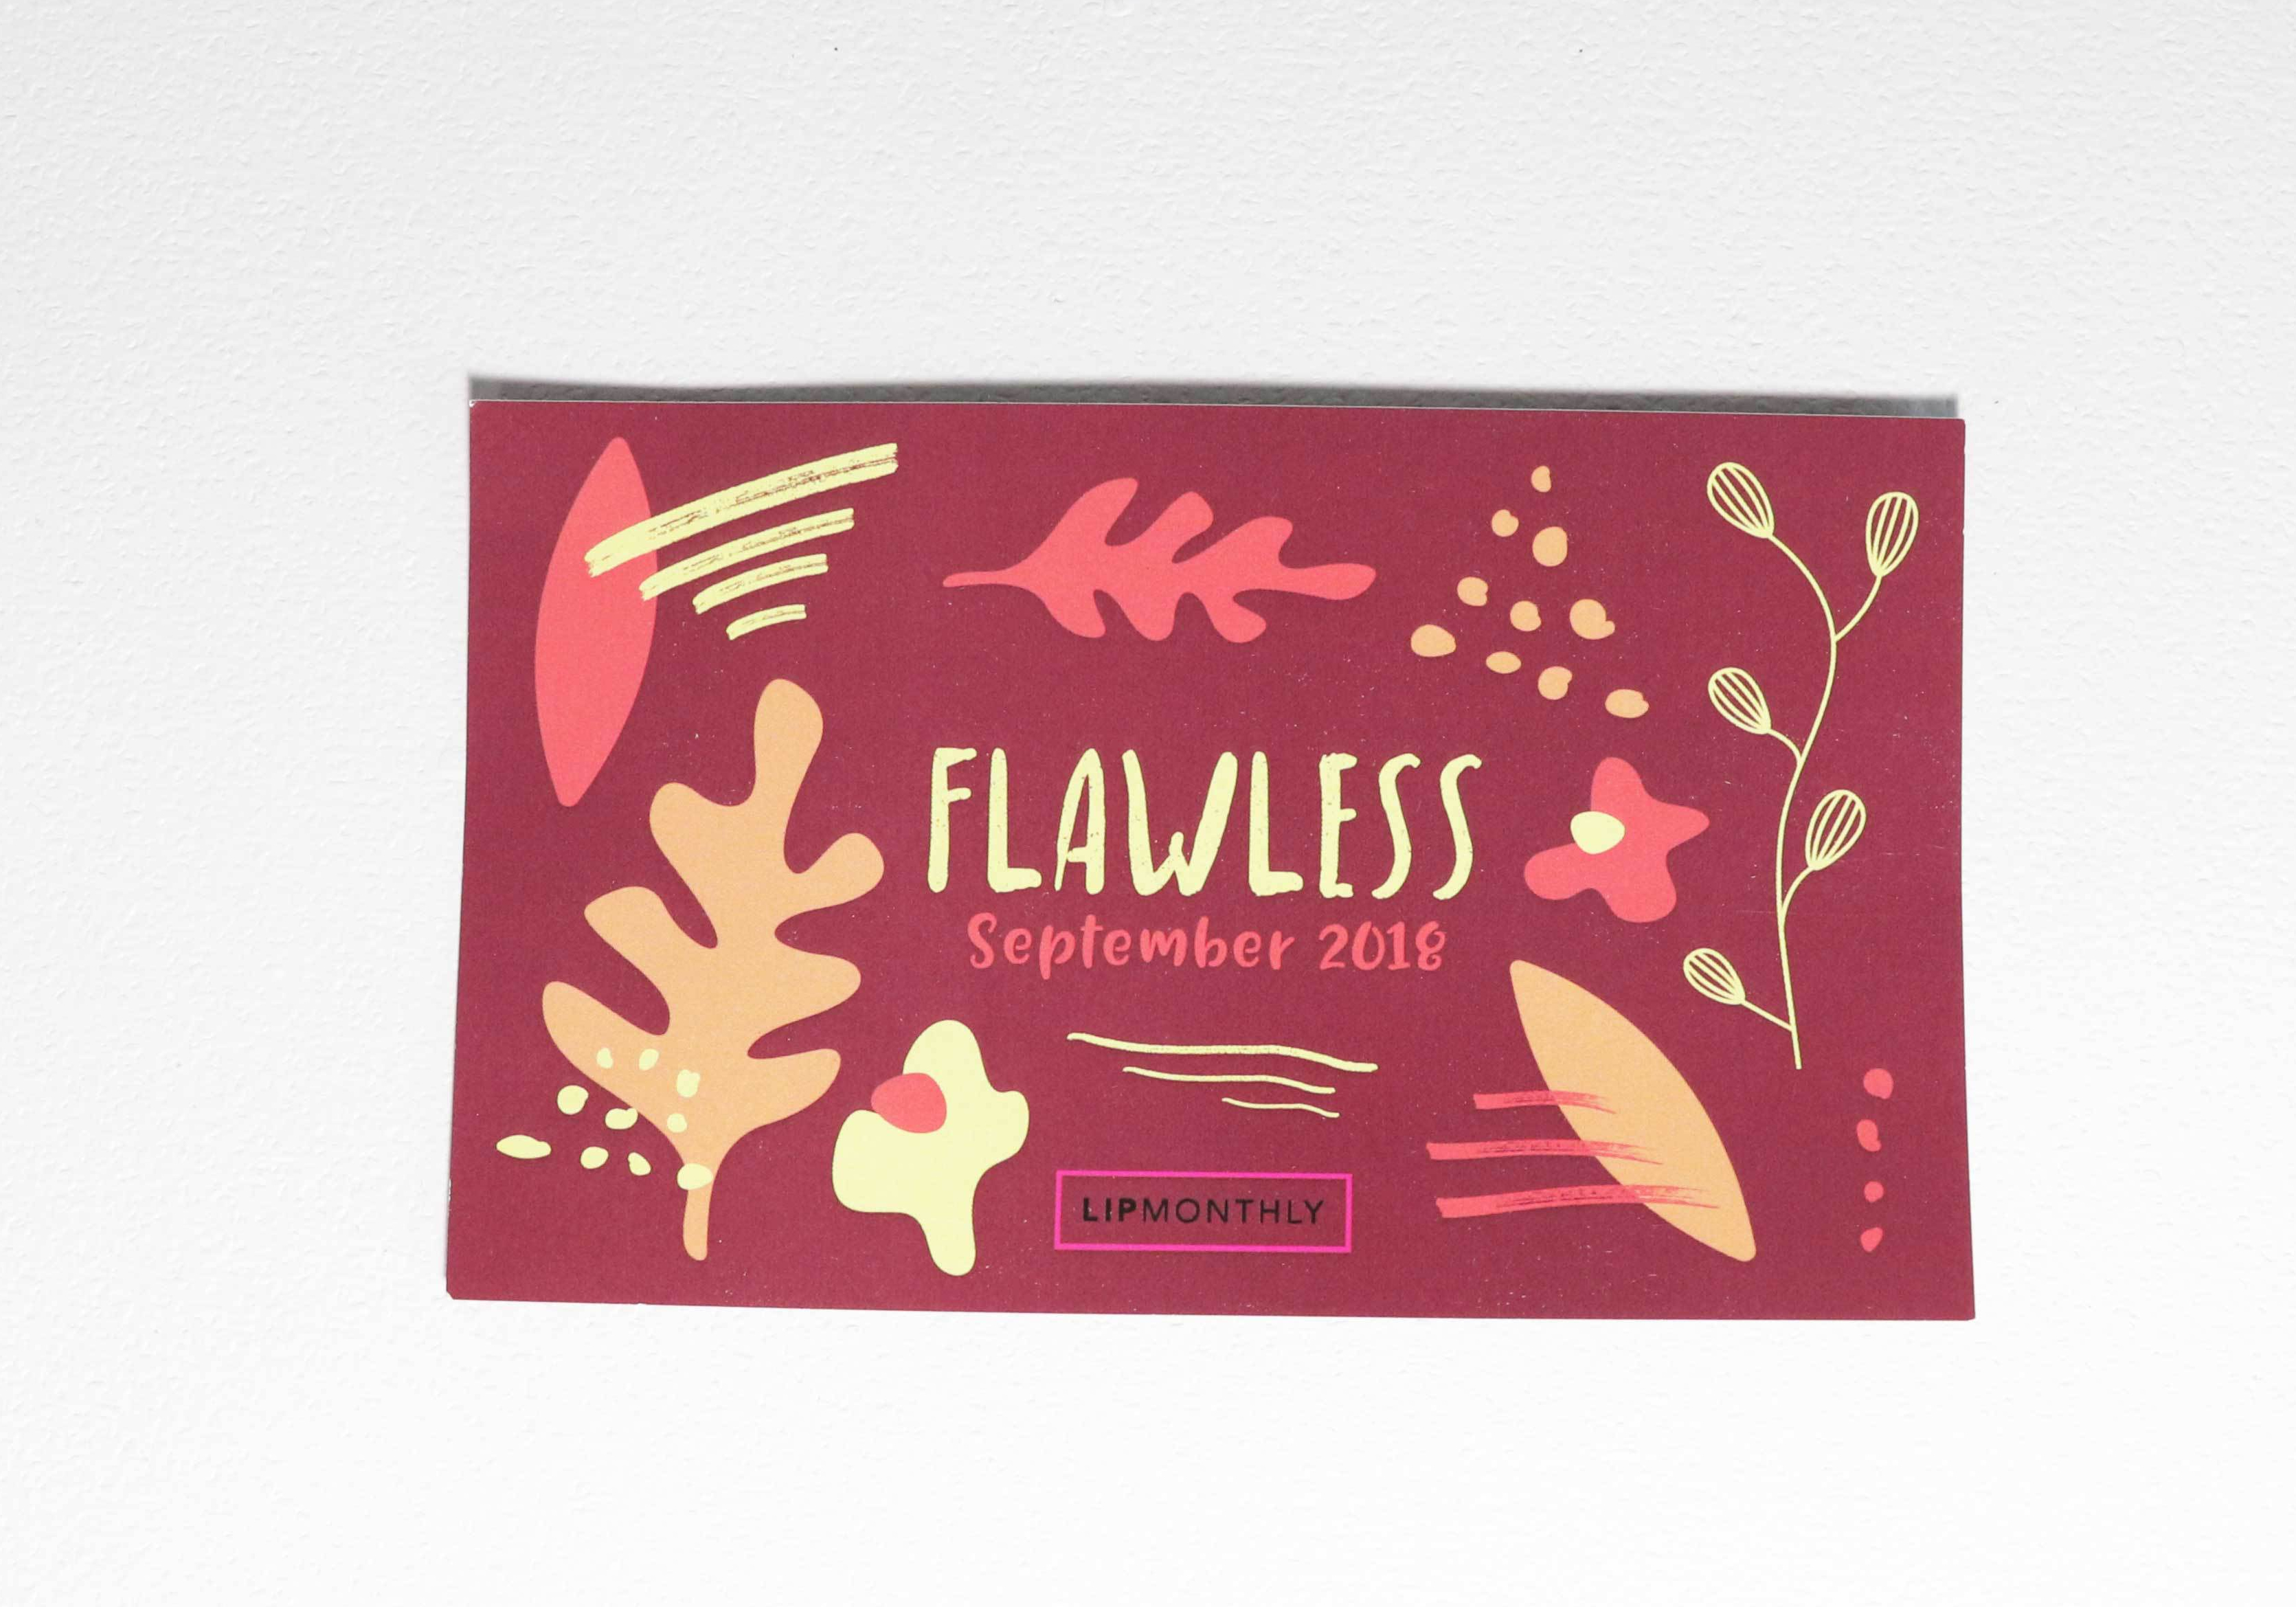 Lip Monthly 'Flawless' September 2018